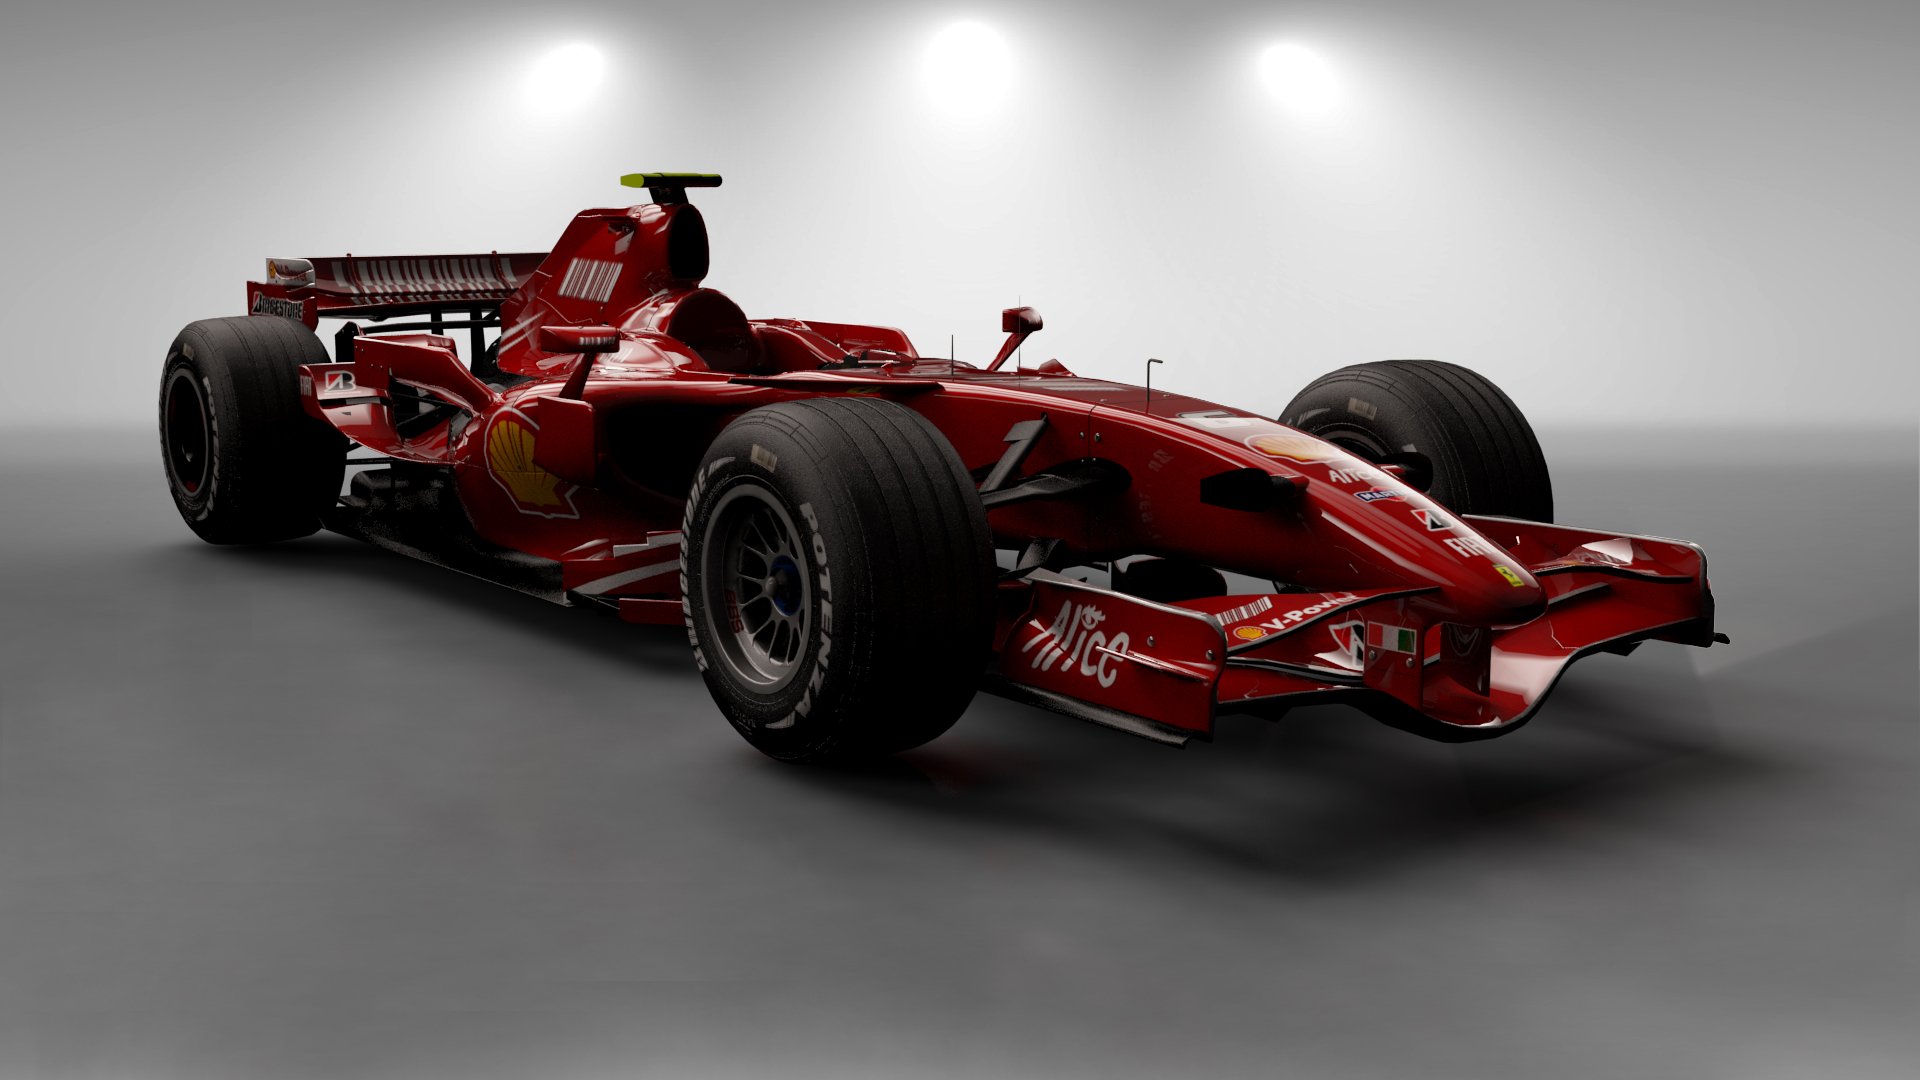 More information about "Assetto Corsa: Ferrari F2007 by VRC Modding Team"